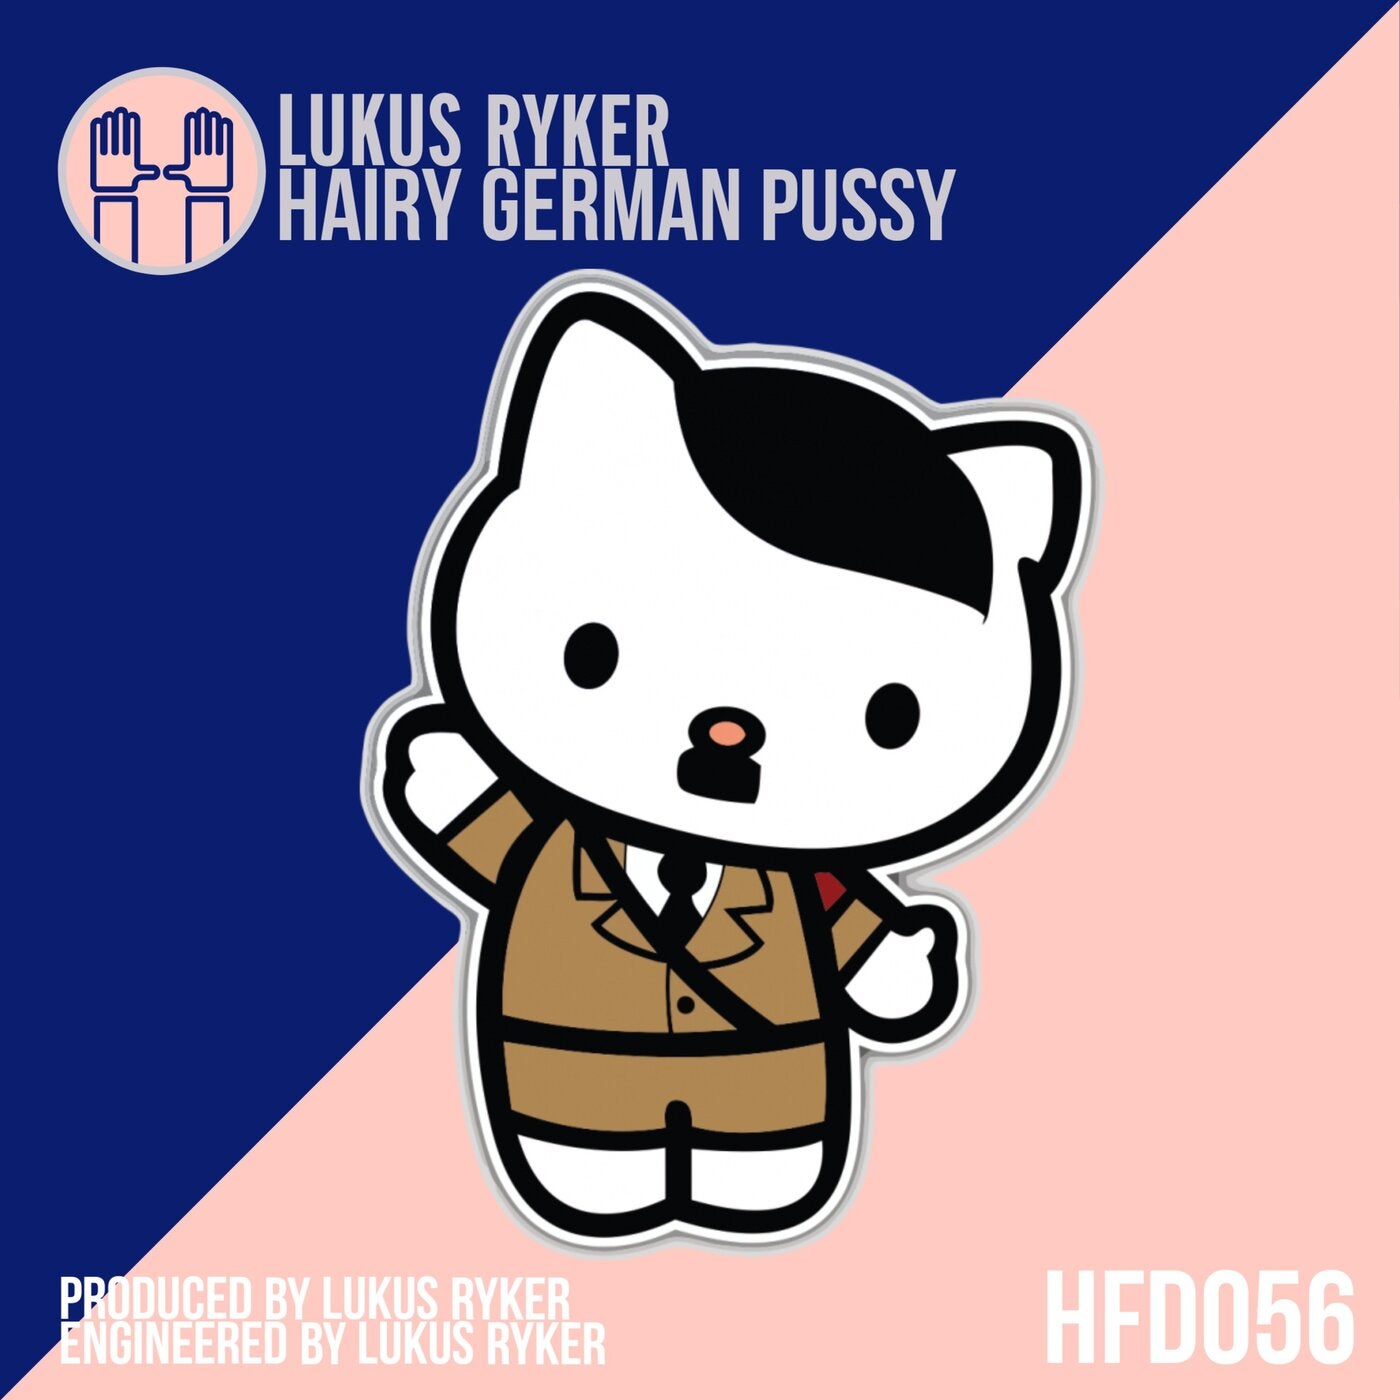 Hairy German Pussy